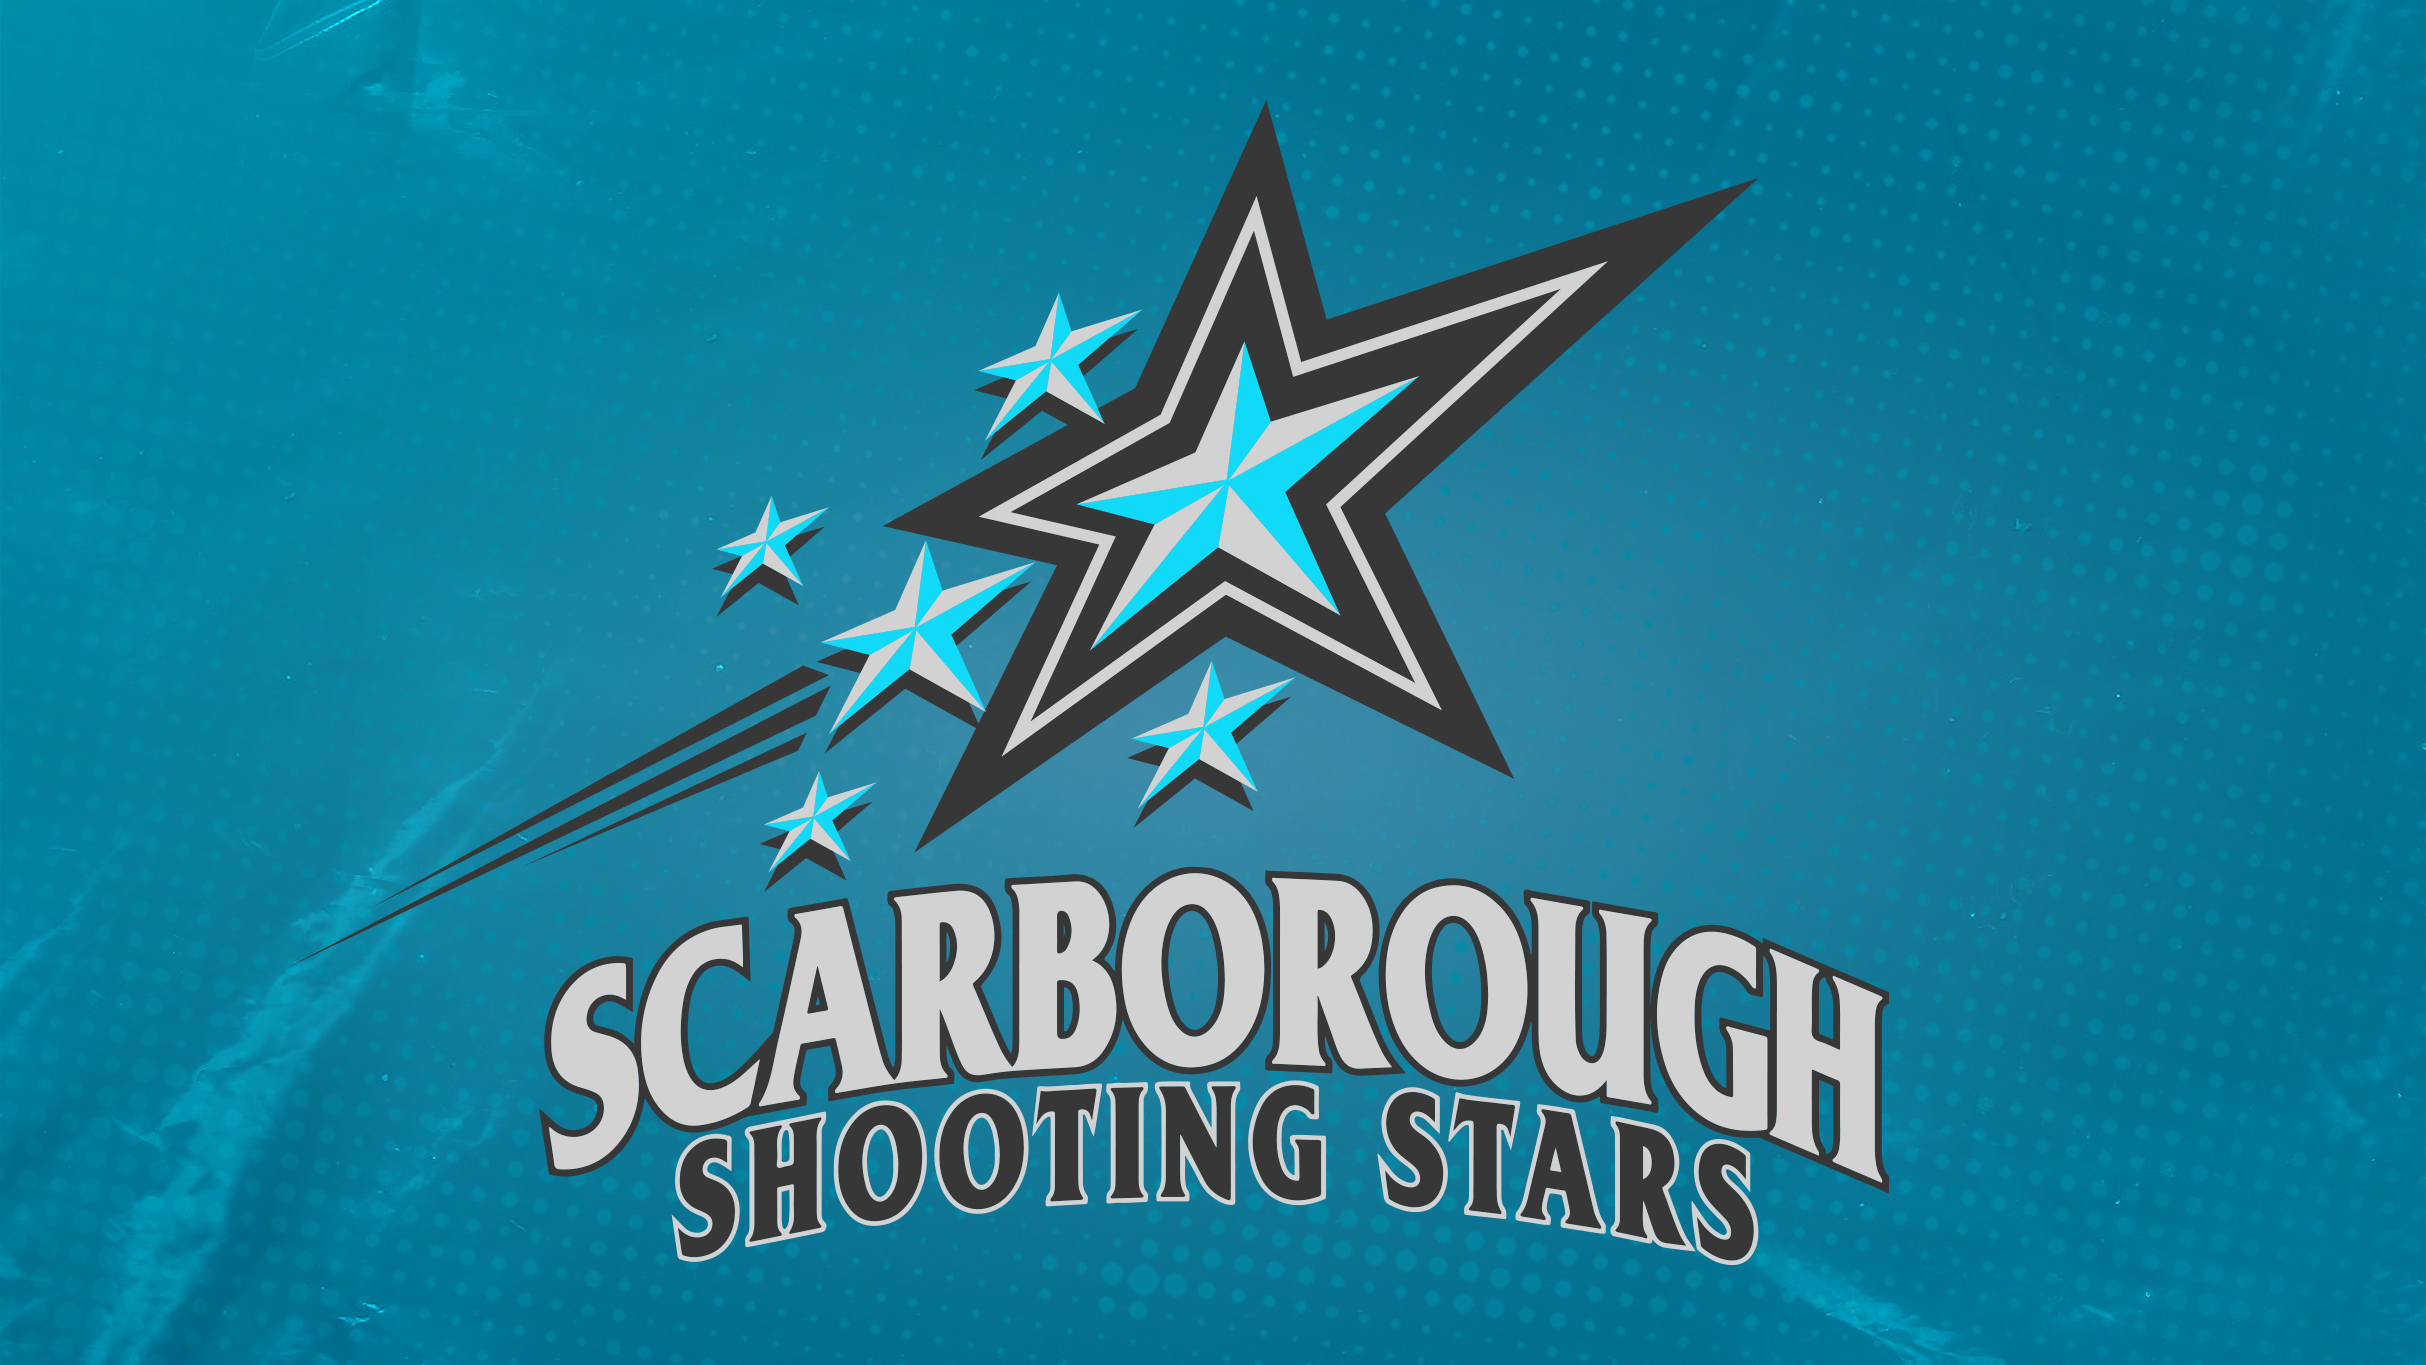 Scarborough Shooting Stars vs. Niagara River Lions